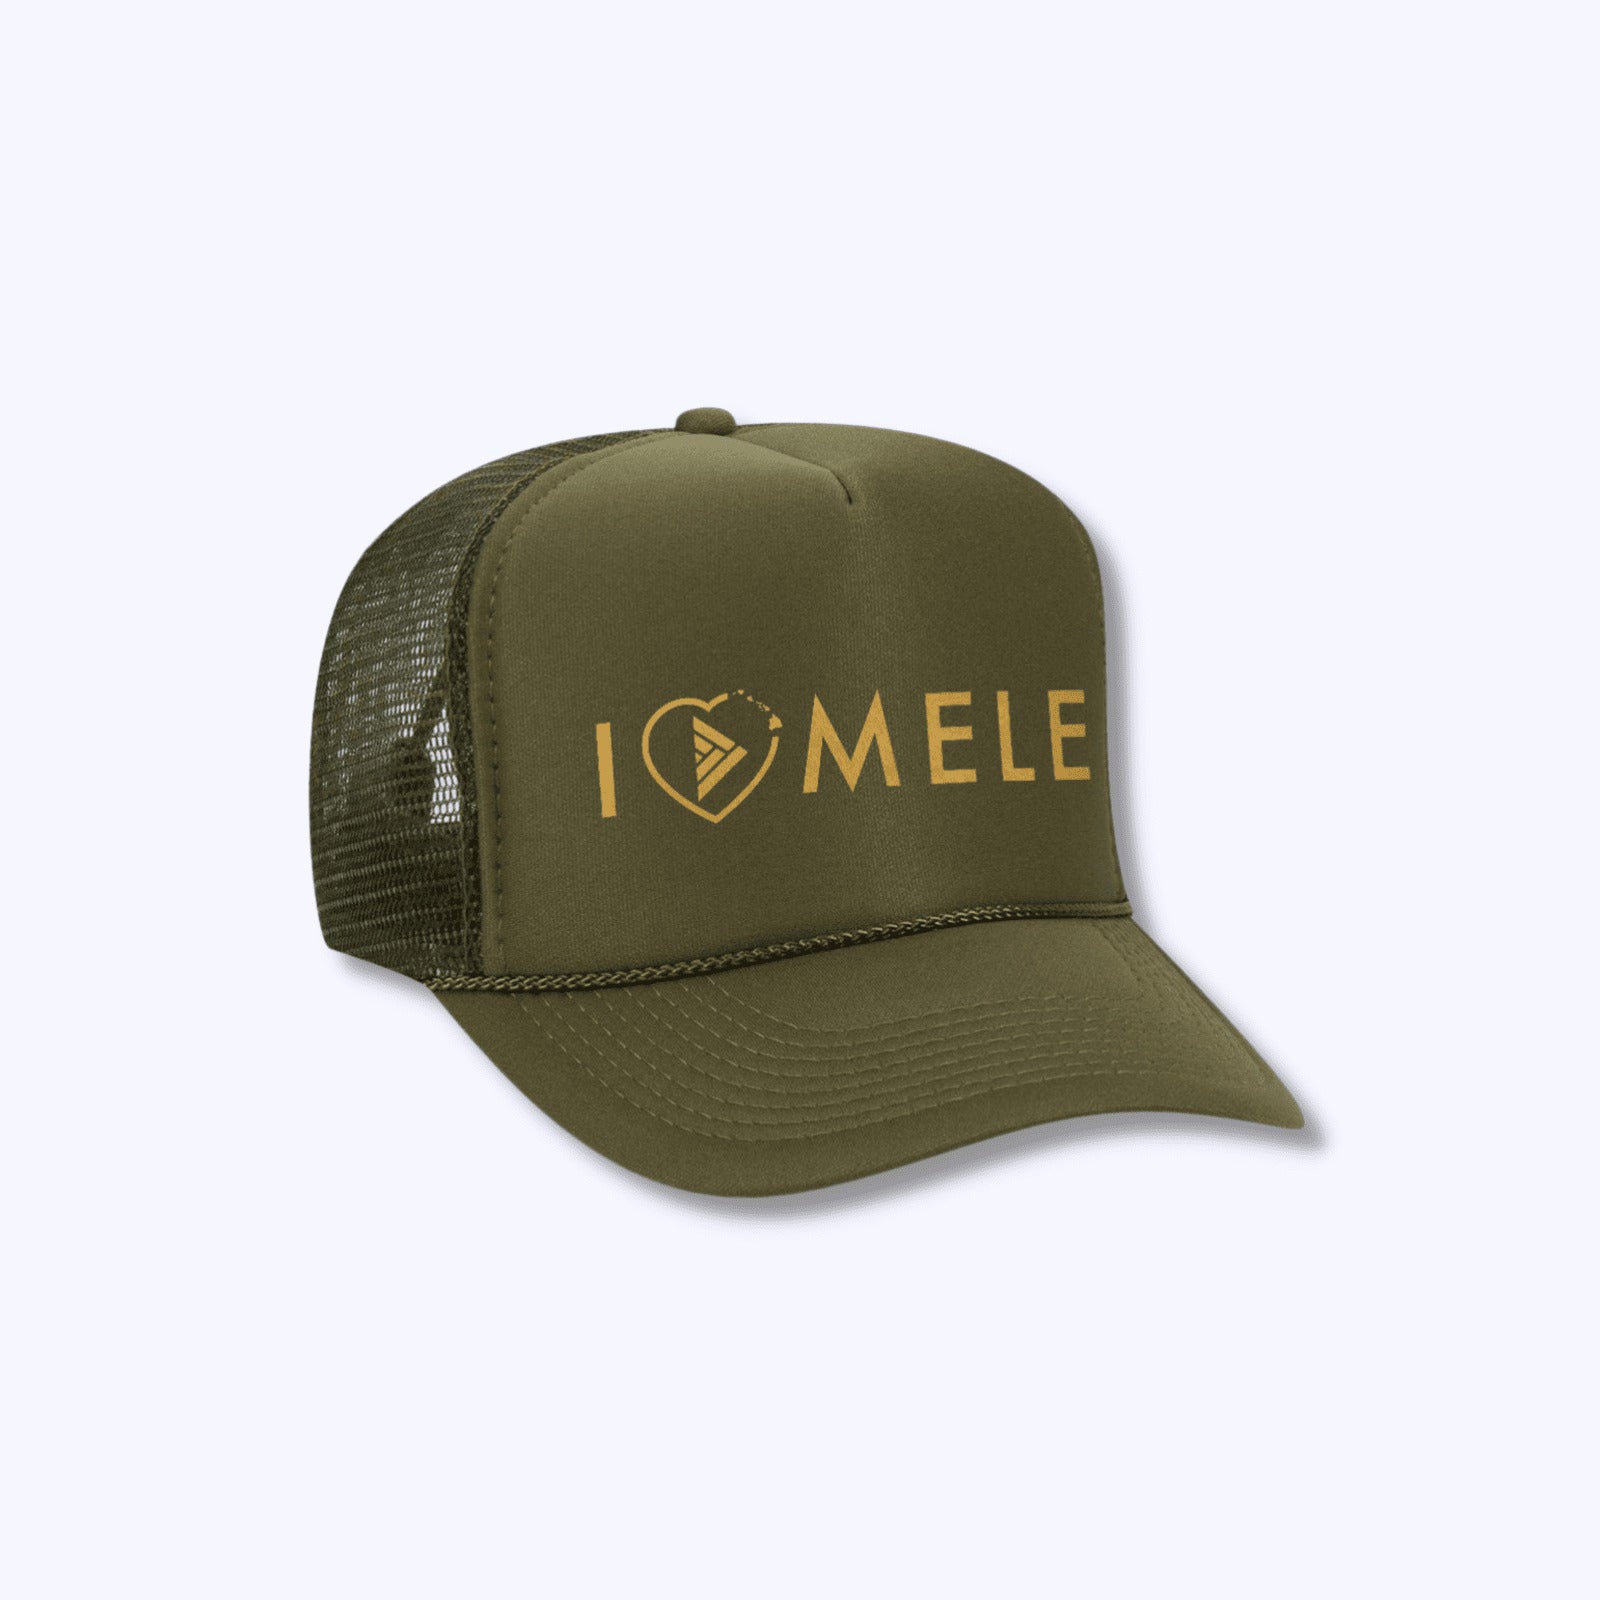 Pop-Up Mākeke - Haku Collective - I Love Mele Adult Trucker Hat - Green & Gold